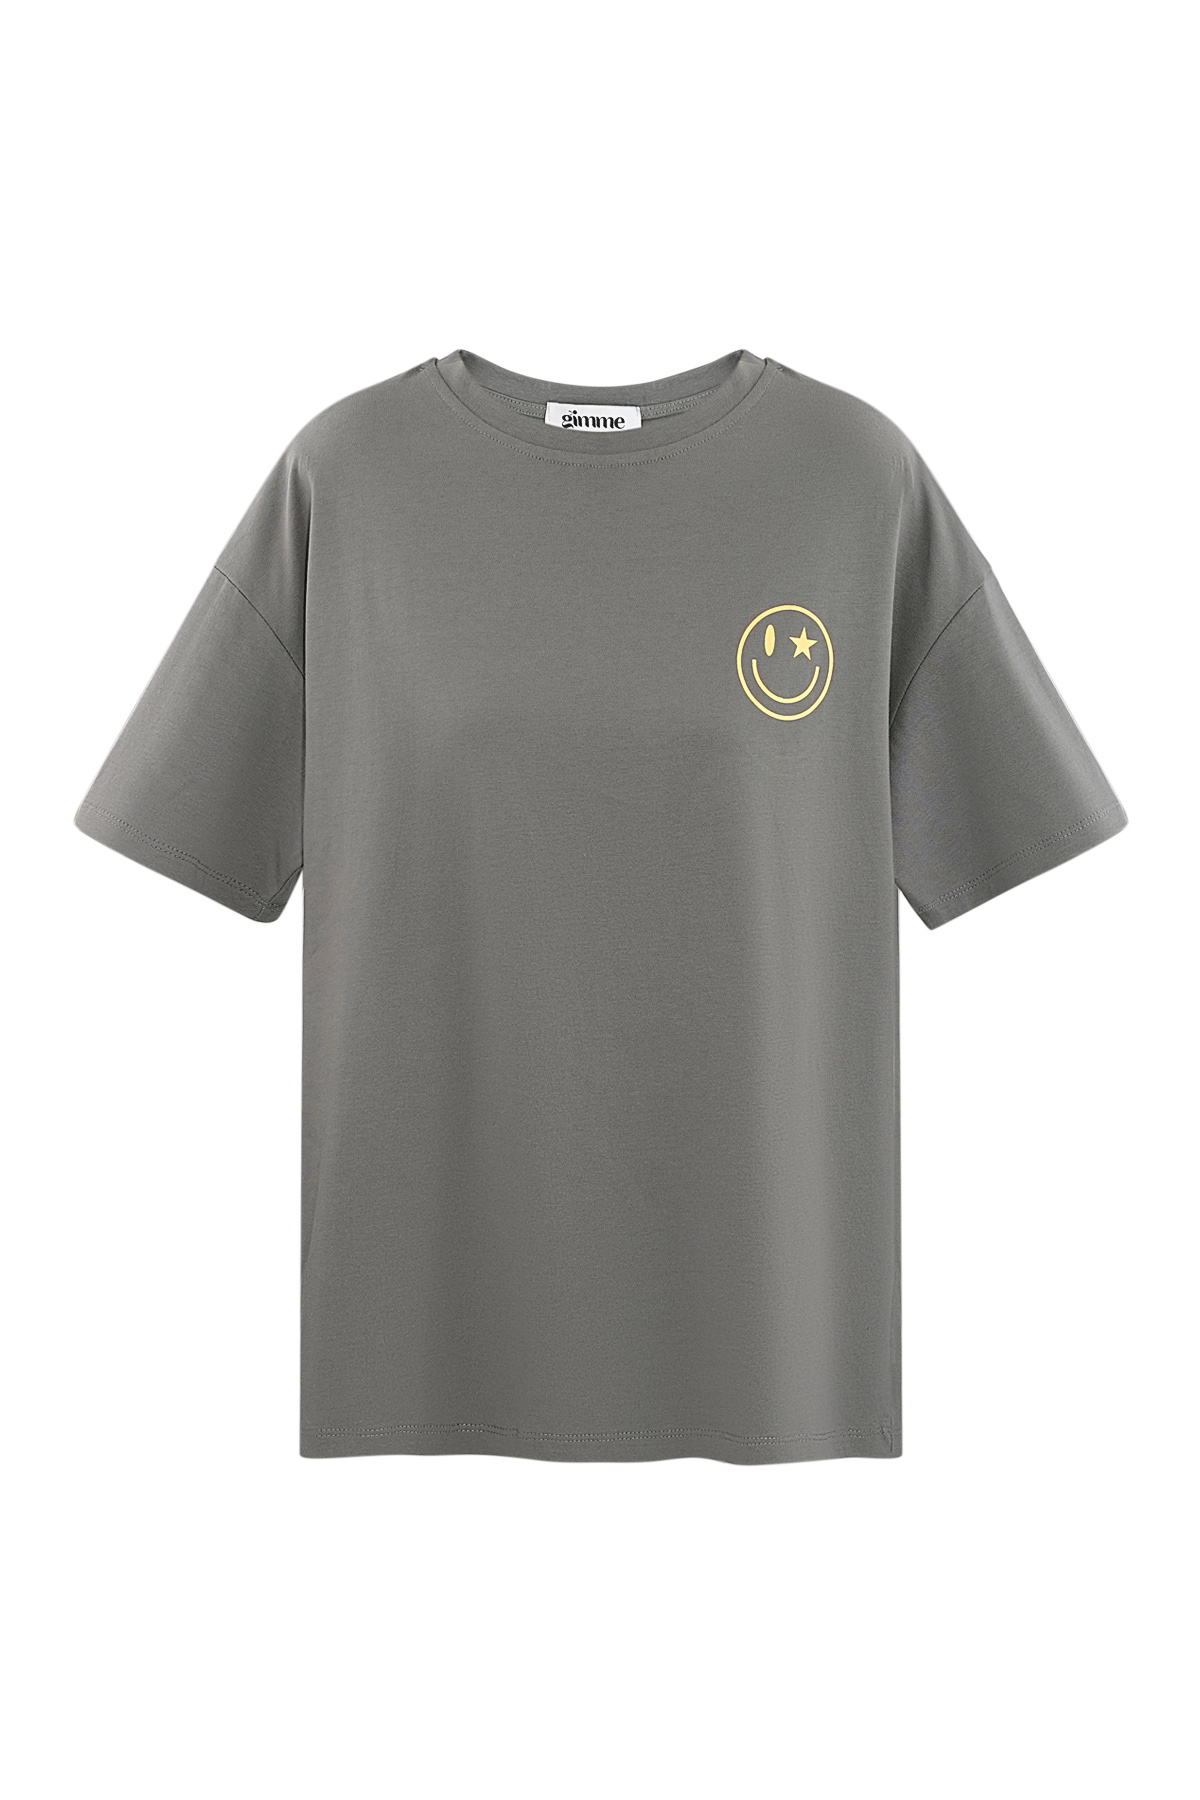 T-shirt happy life smiley - grijs